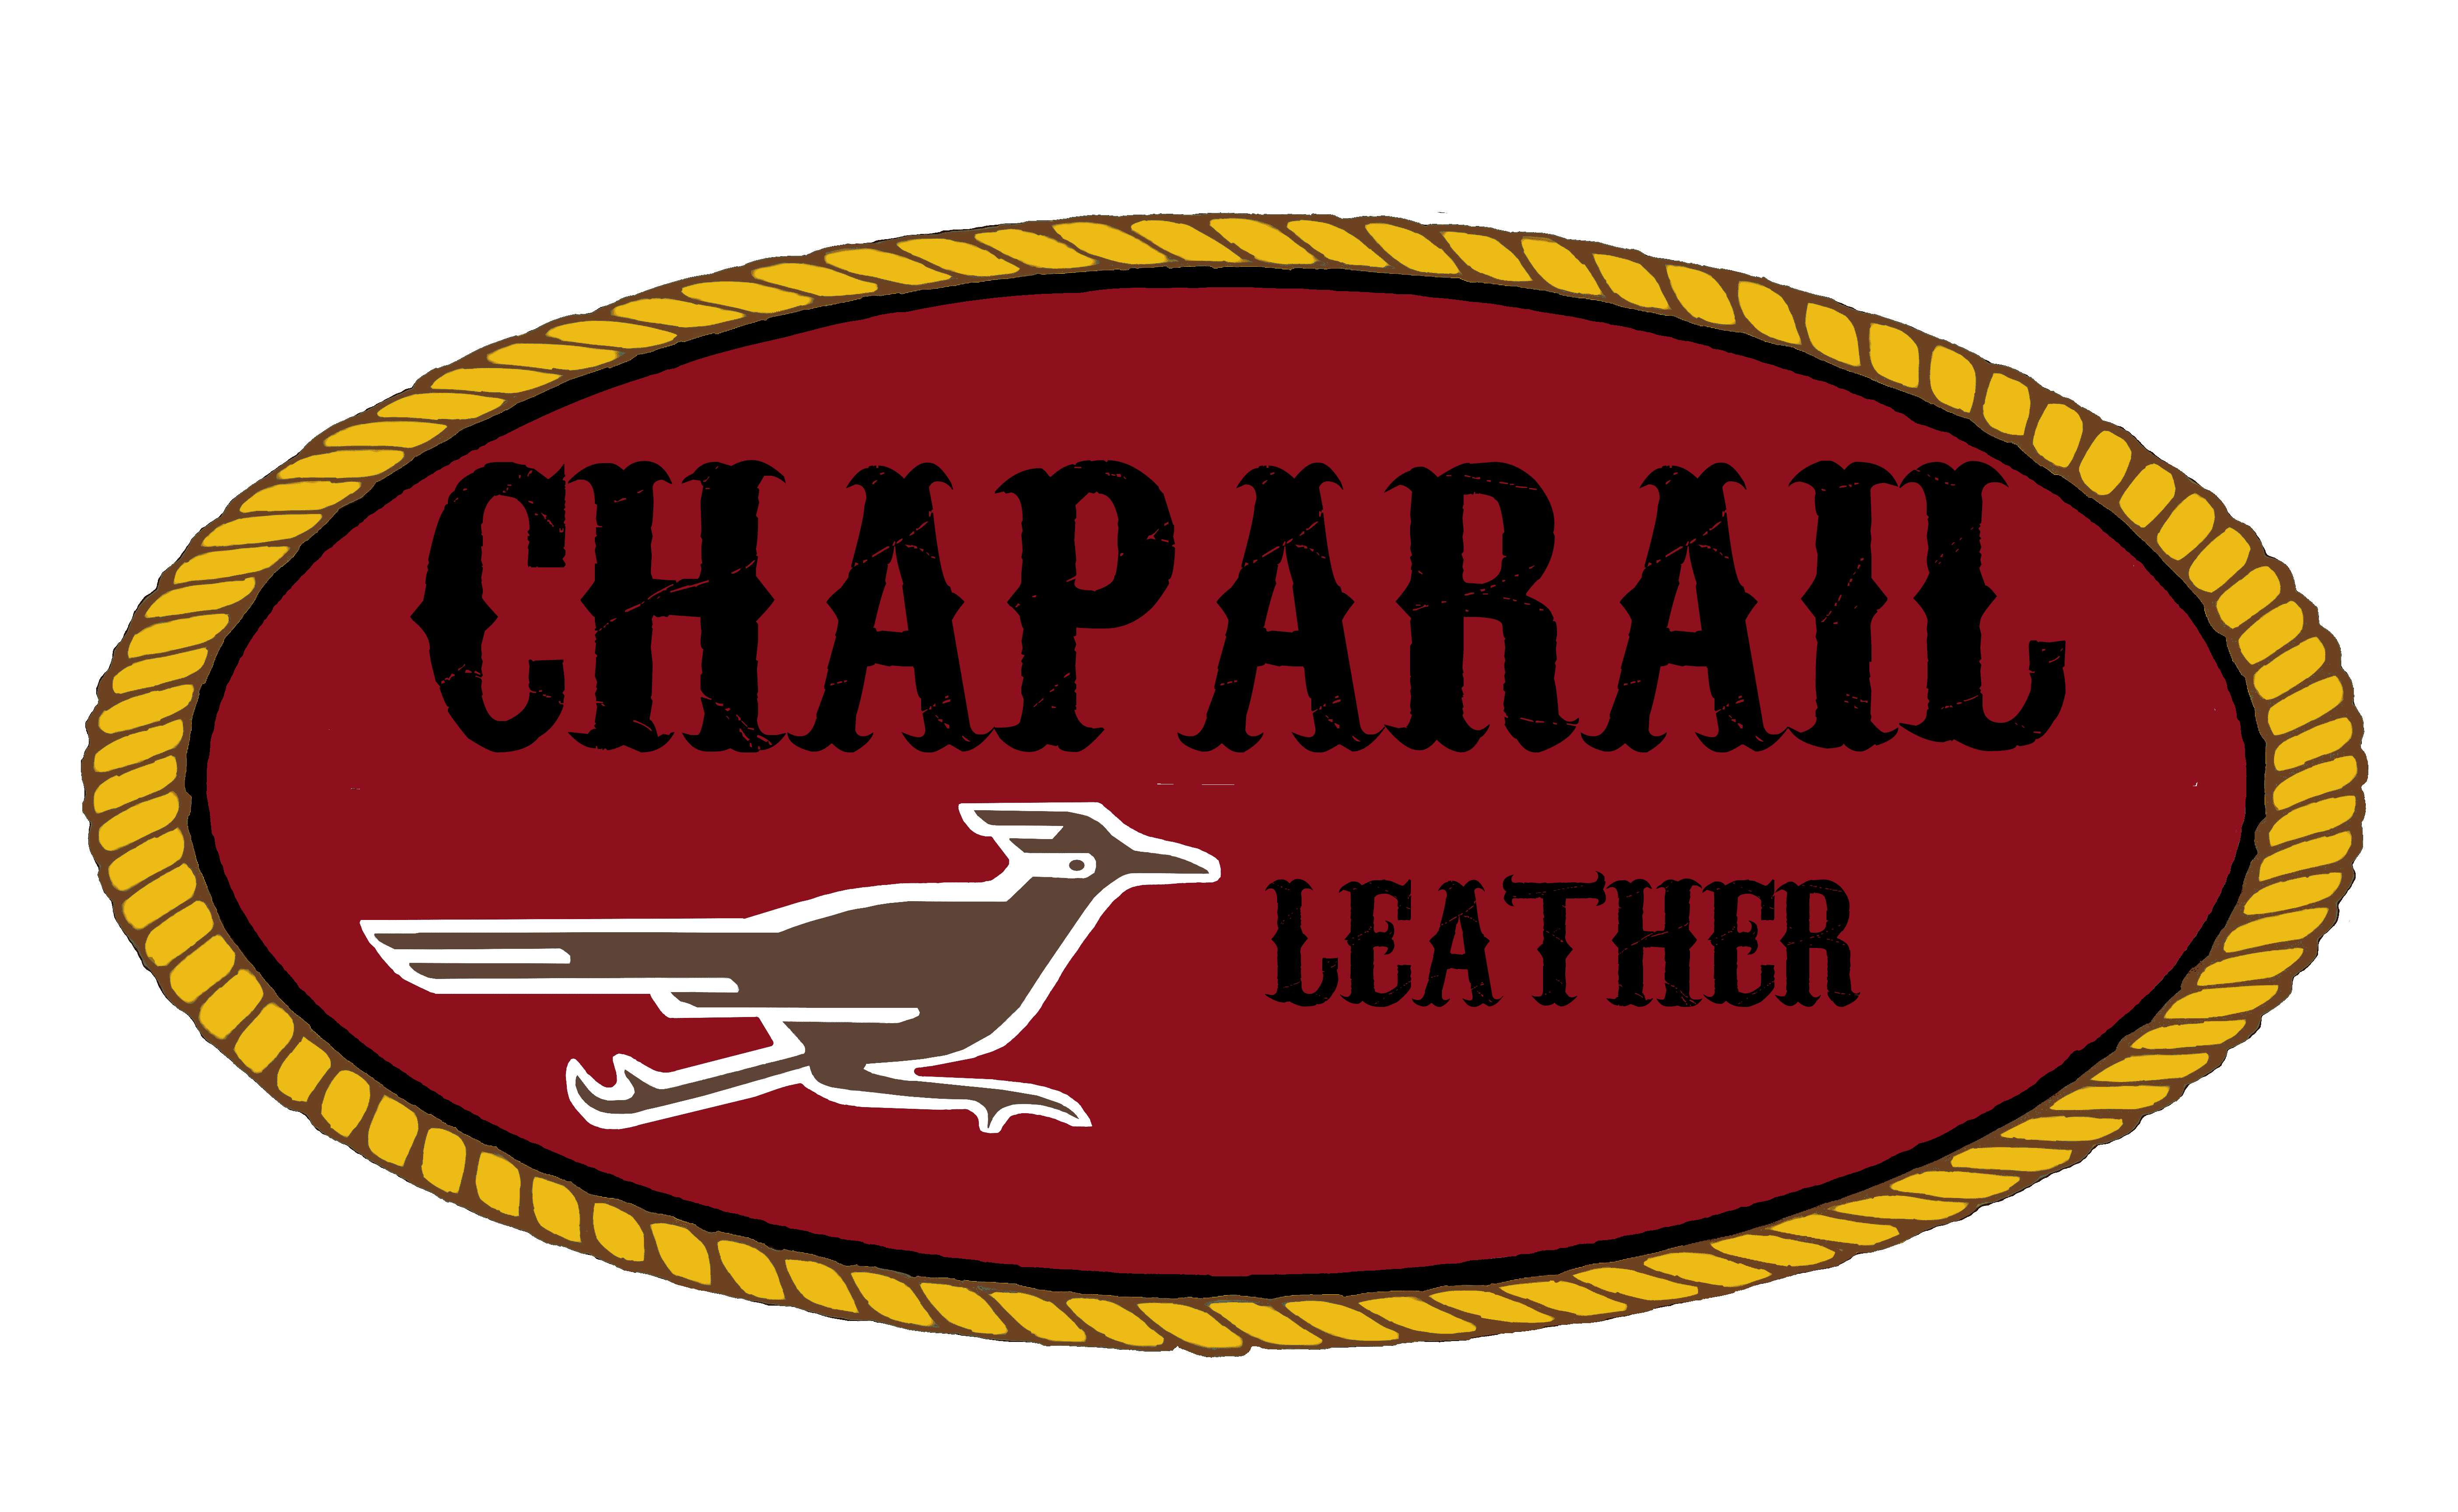 Chaparail Leather